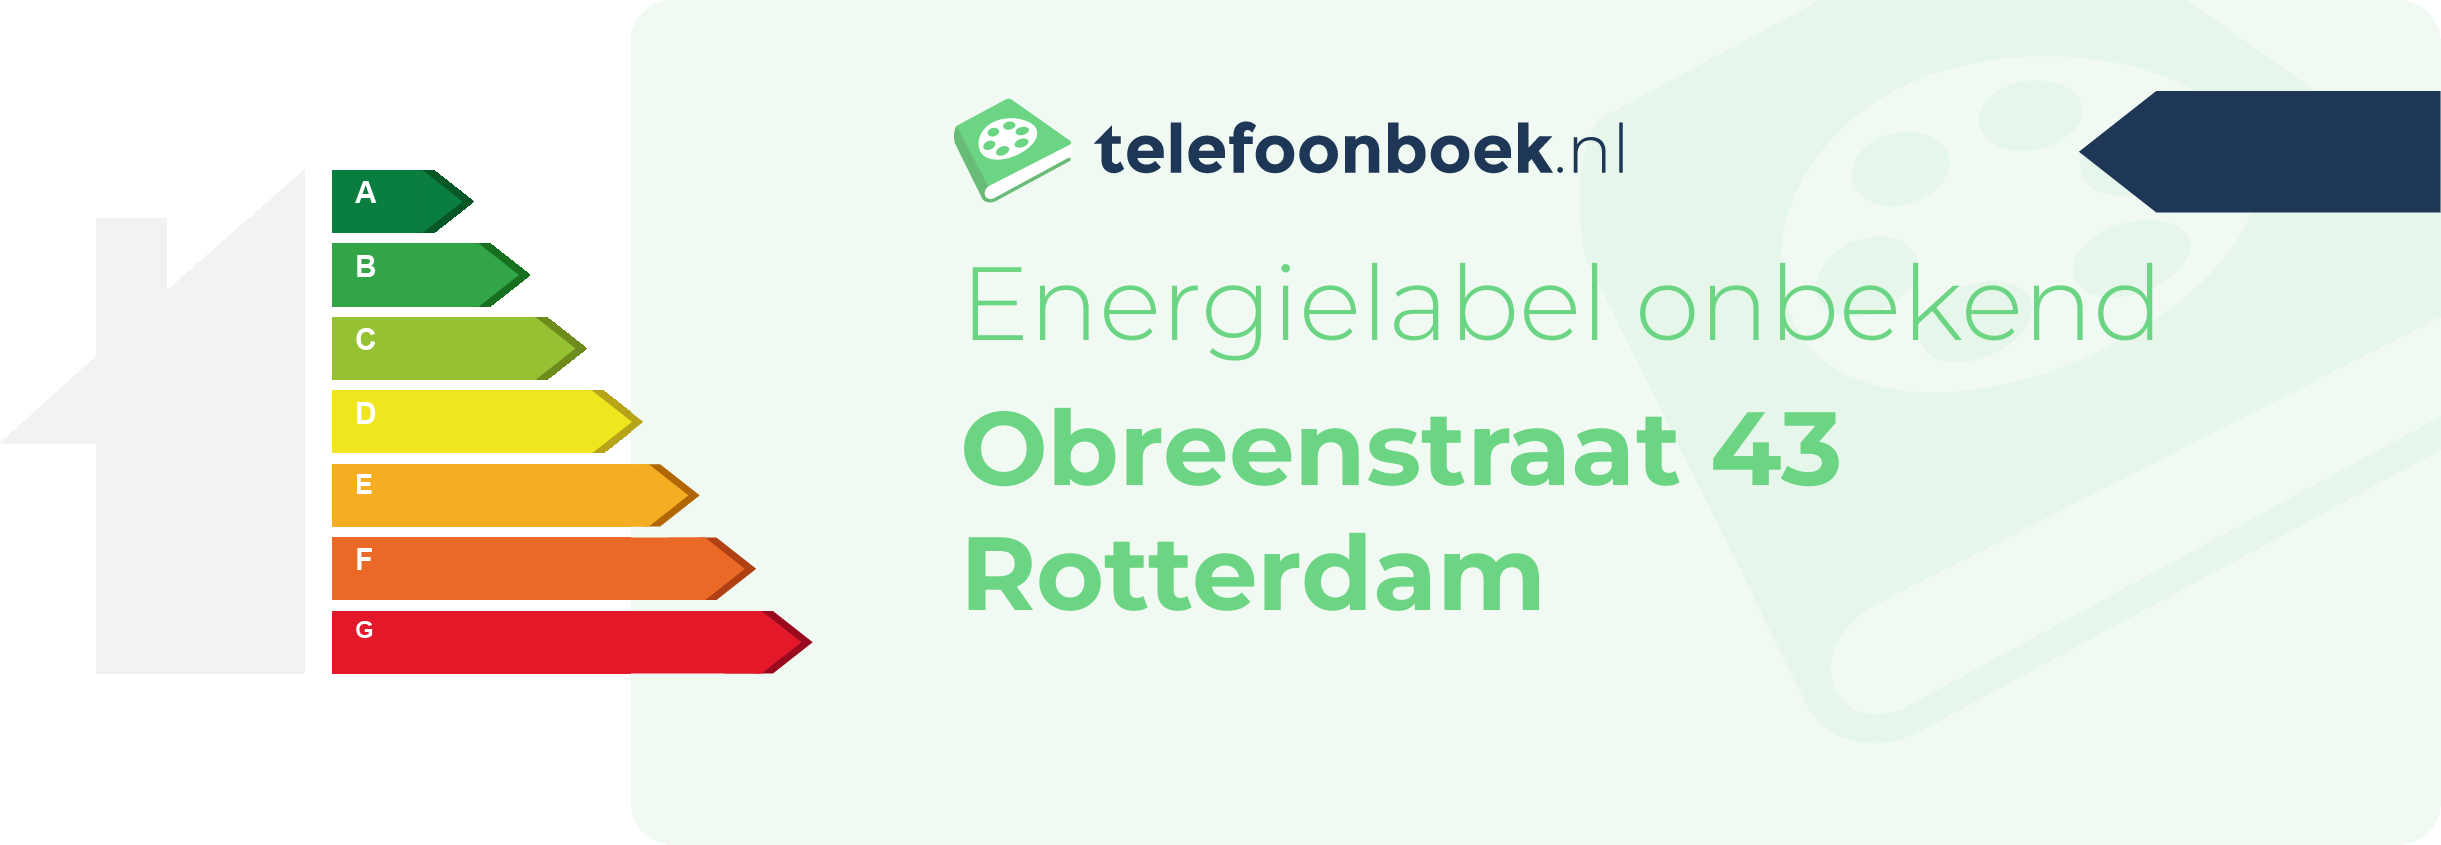 Energielabel Obreenstraat 43 Rotterdam